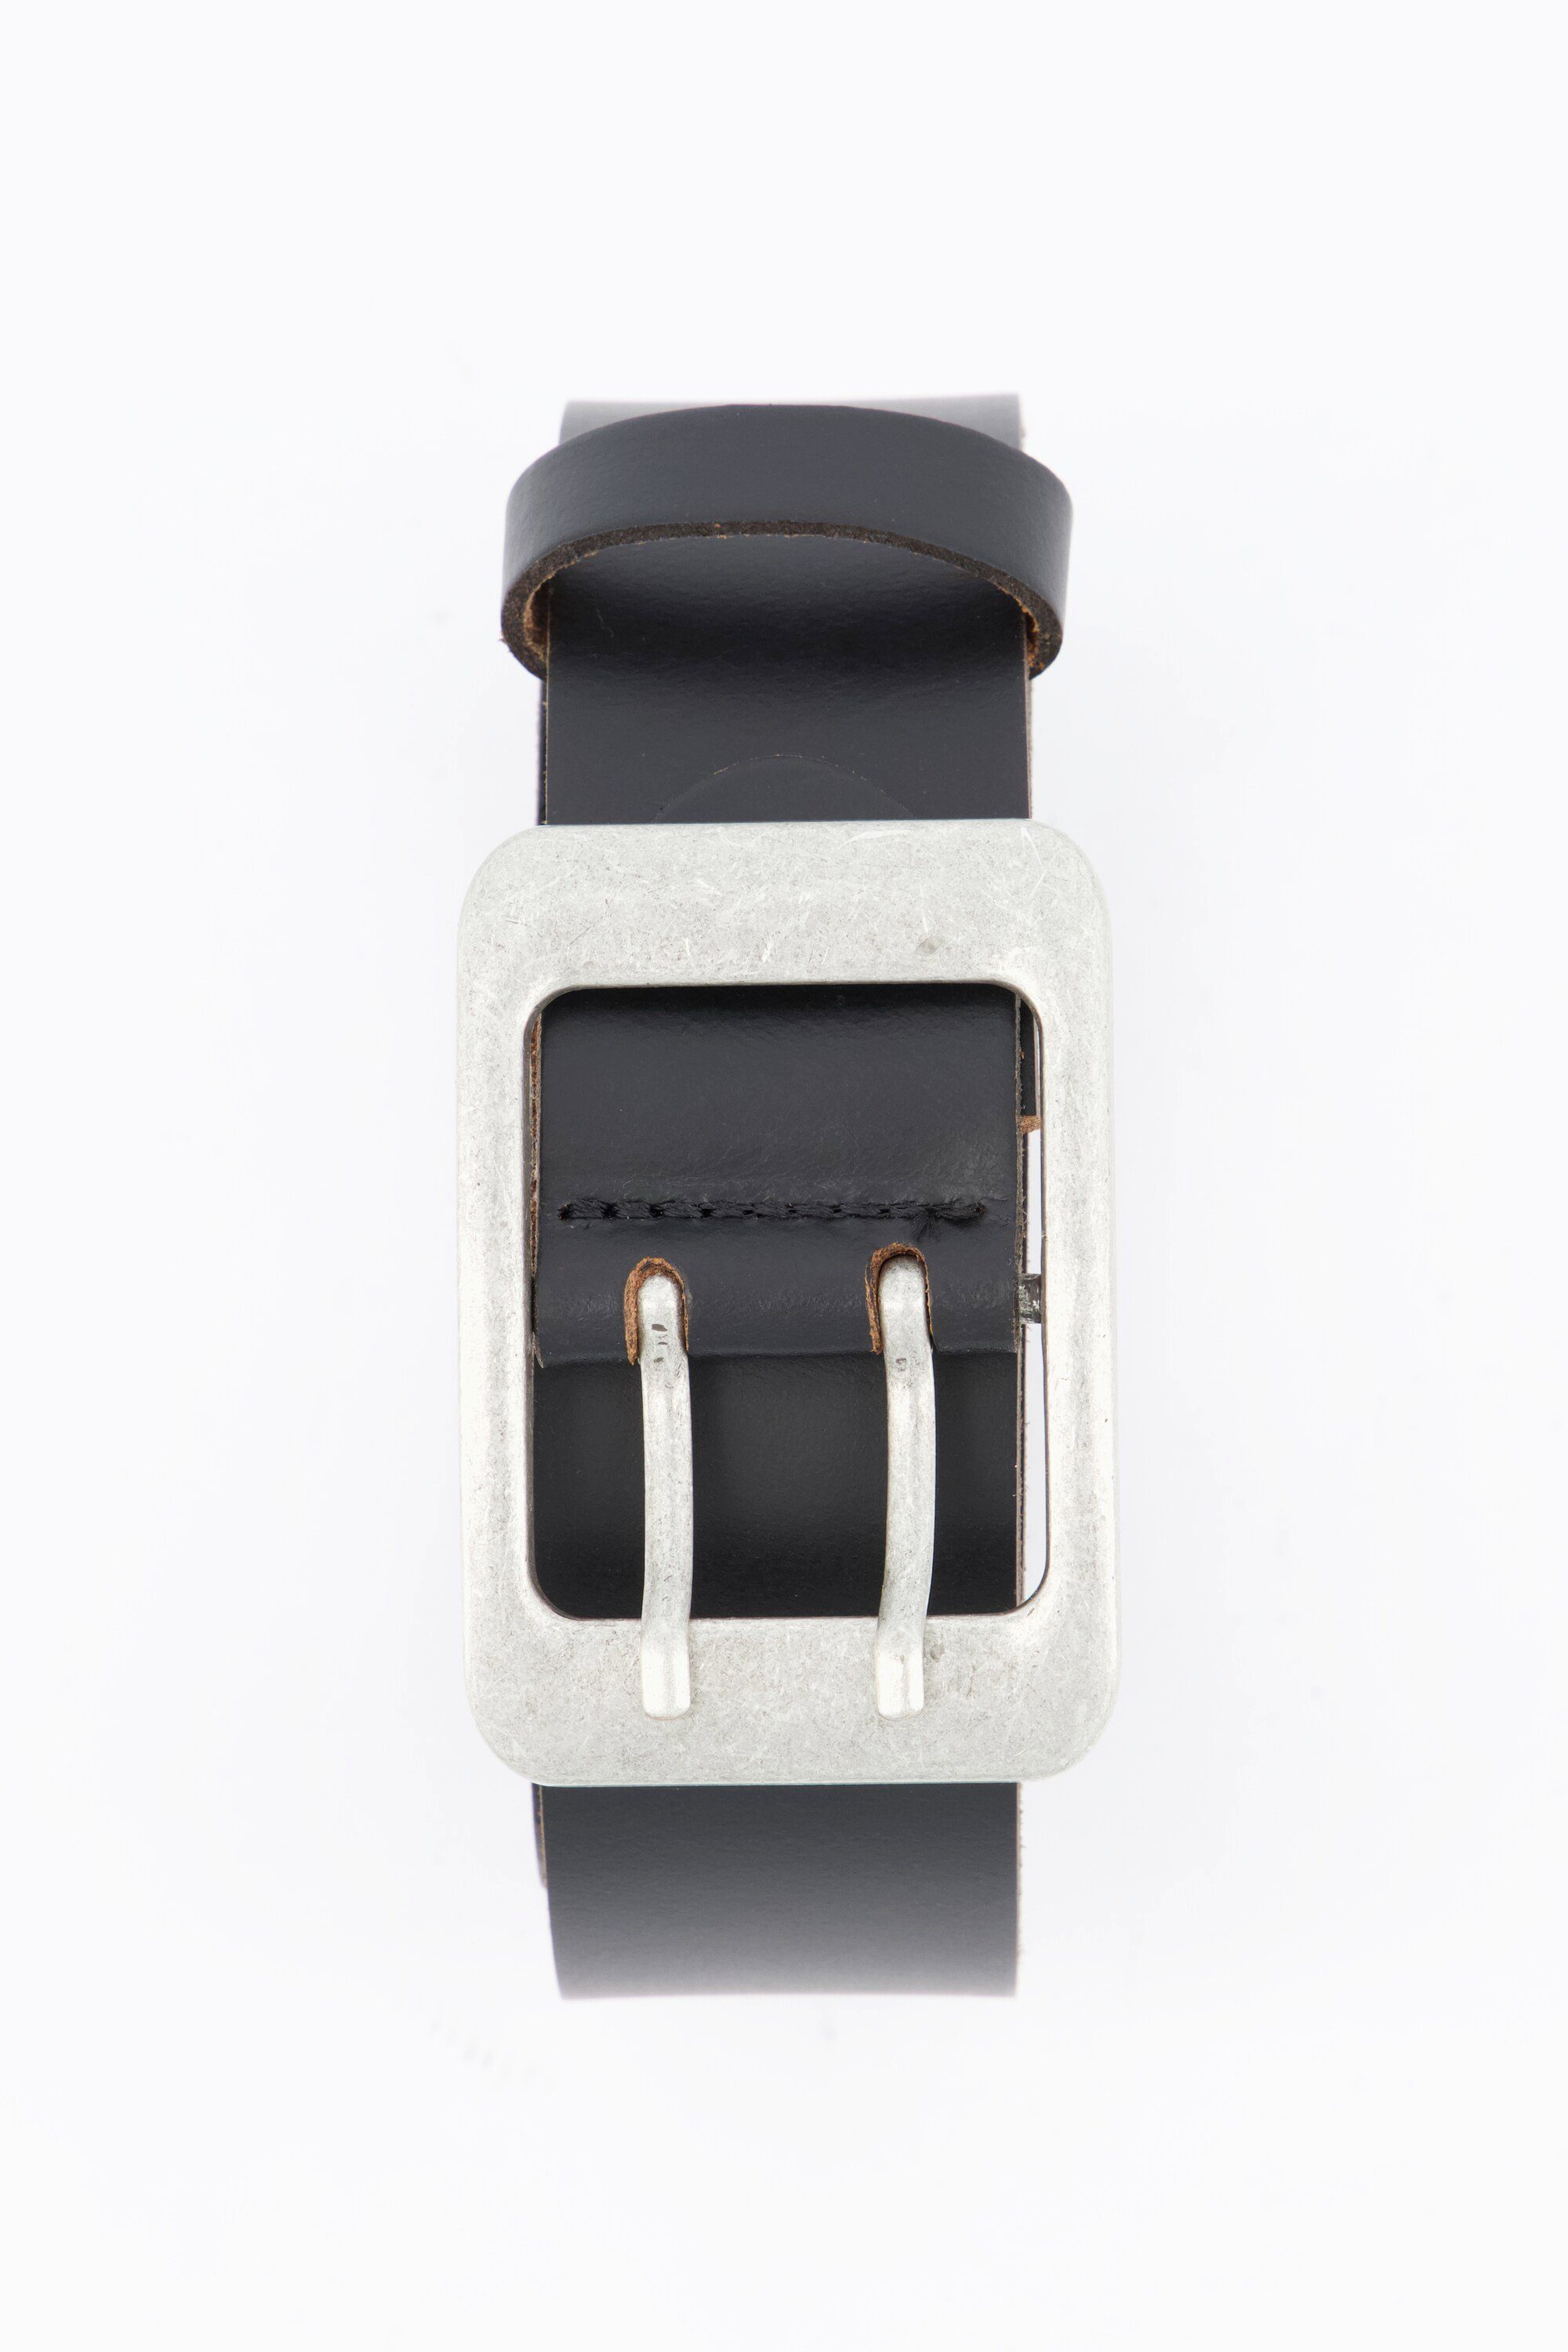 Doppel Hüftgürtel echtes Leder Schließe Gürtel JP1880 Leder